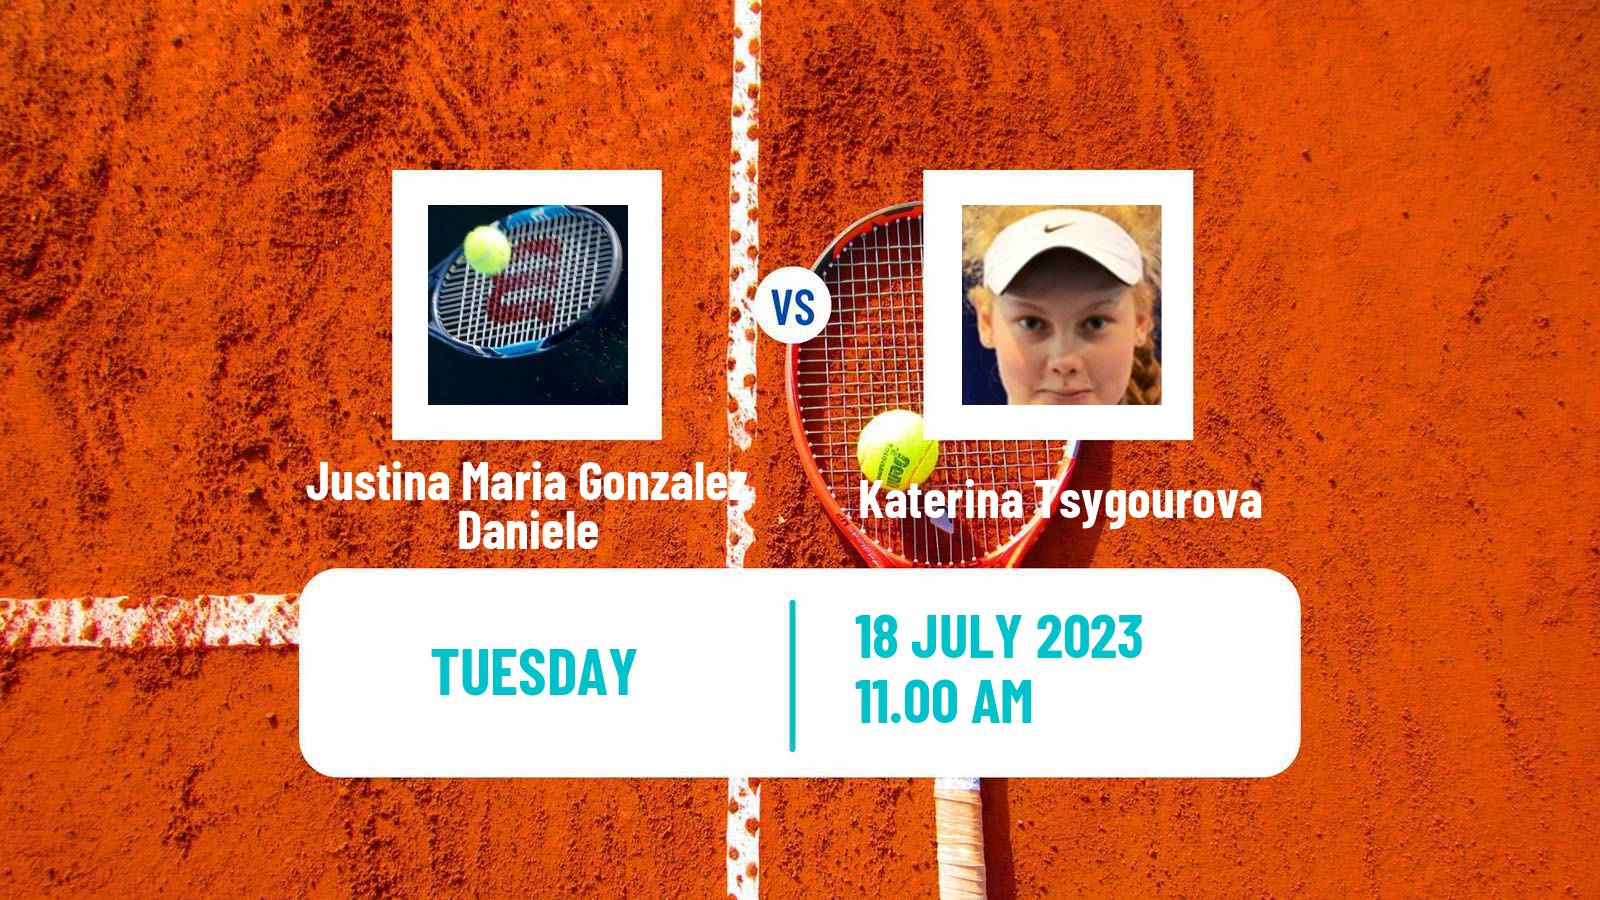 Tennis ITF W15 Les Contamines Montjoie Women Justina Maria Gonzalez Daniele - Katerina Tsygourova